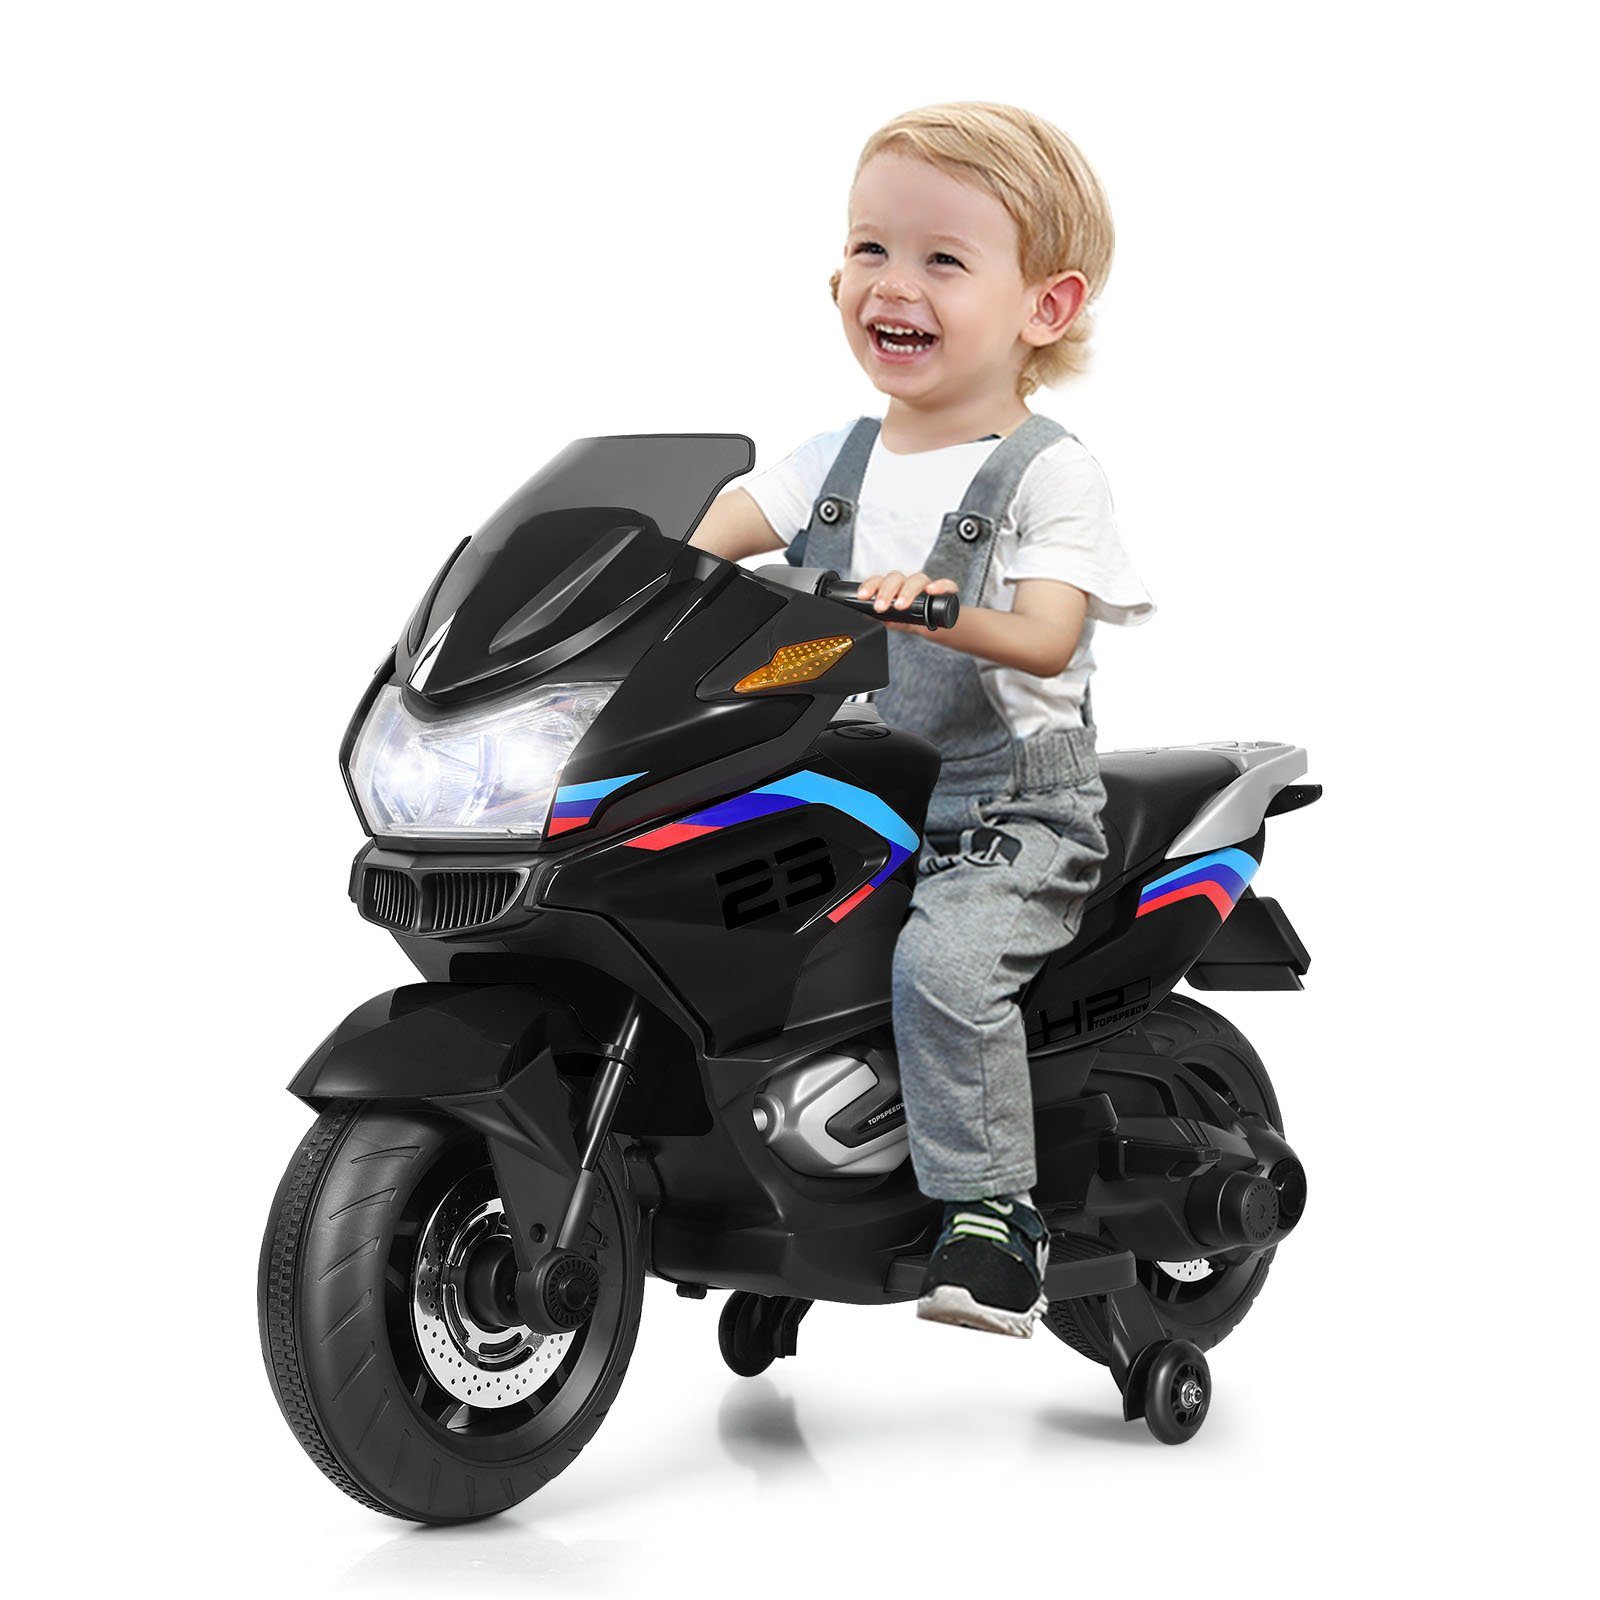 Kindermotorrad Elektromotorrad Polizei Kinder Elektro Motorrad Weiß NEU LQ 998 